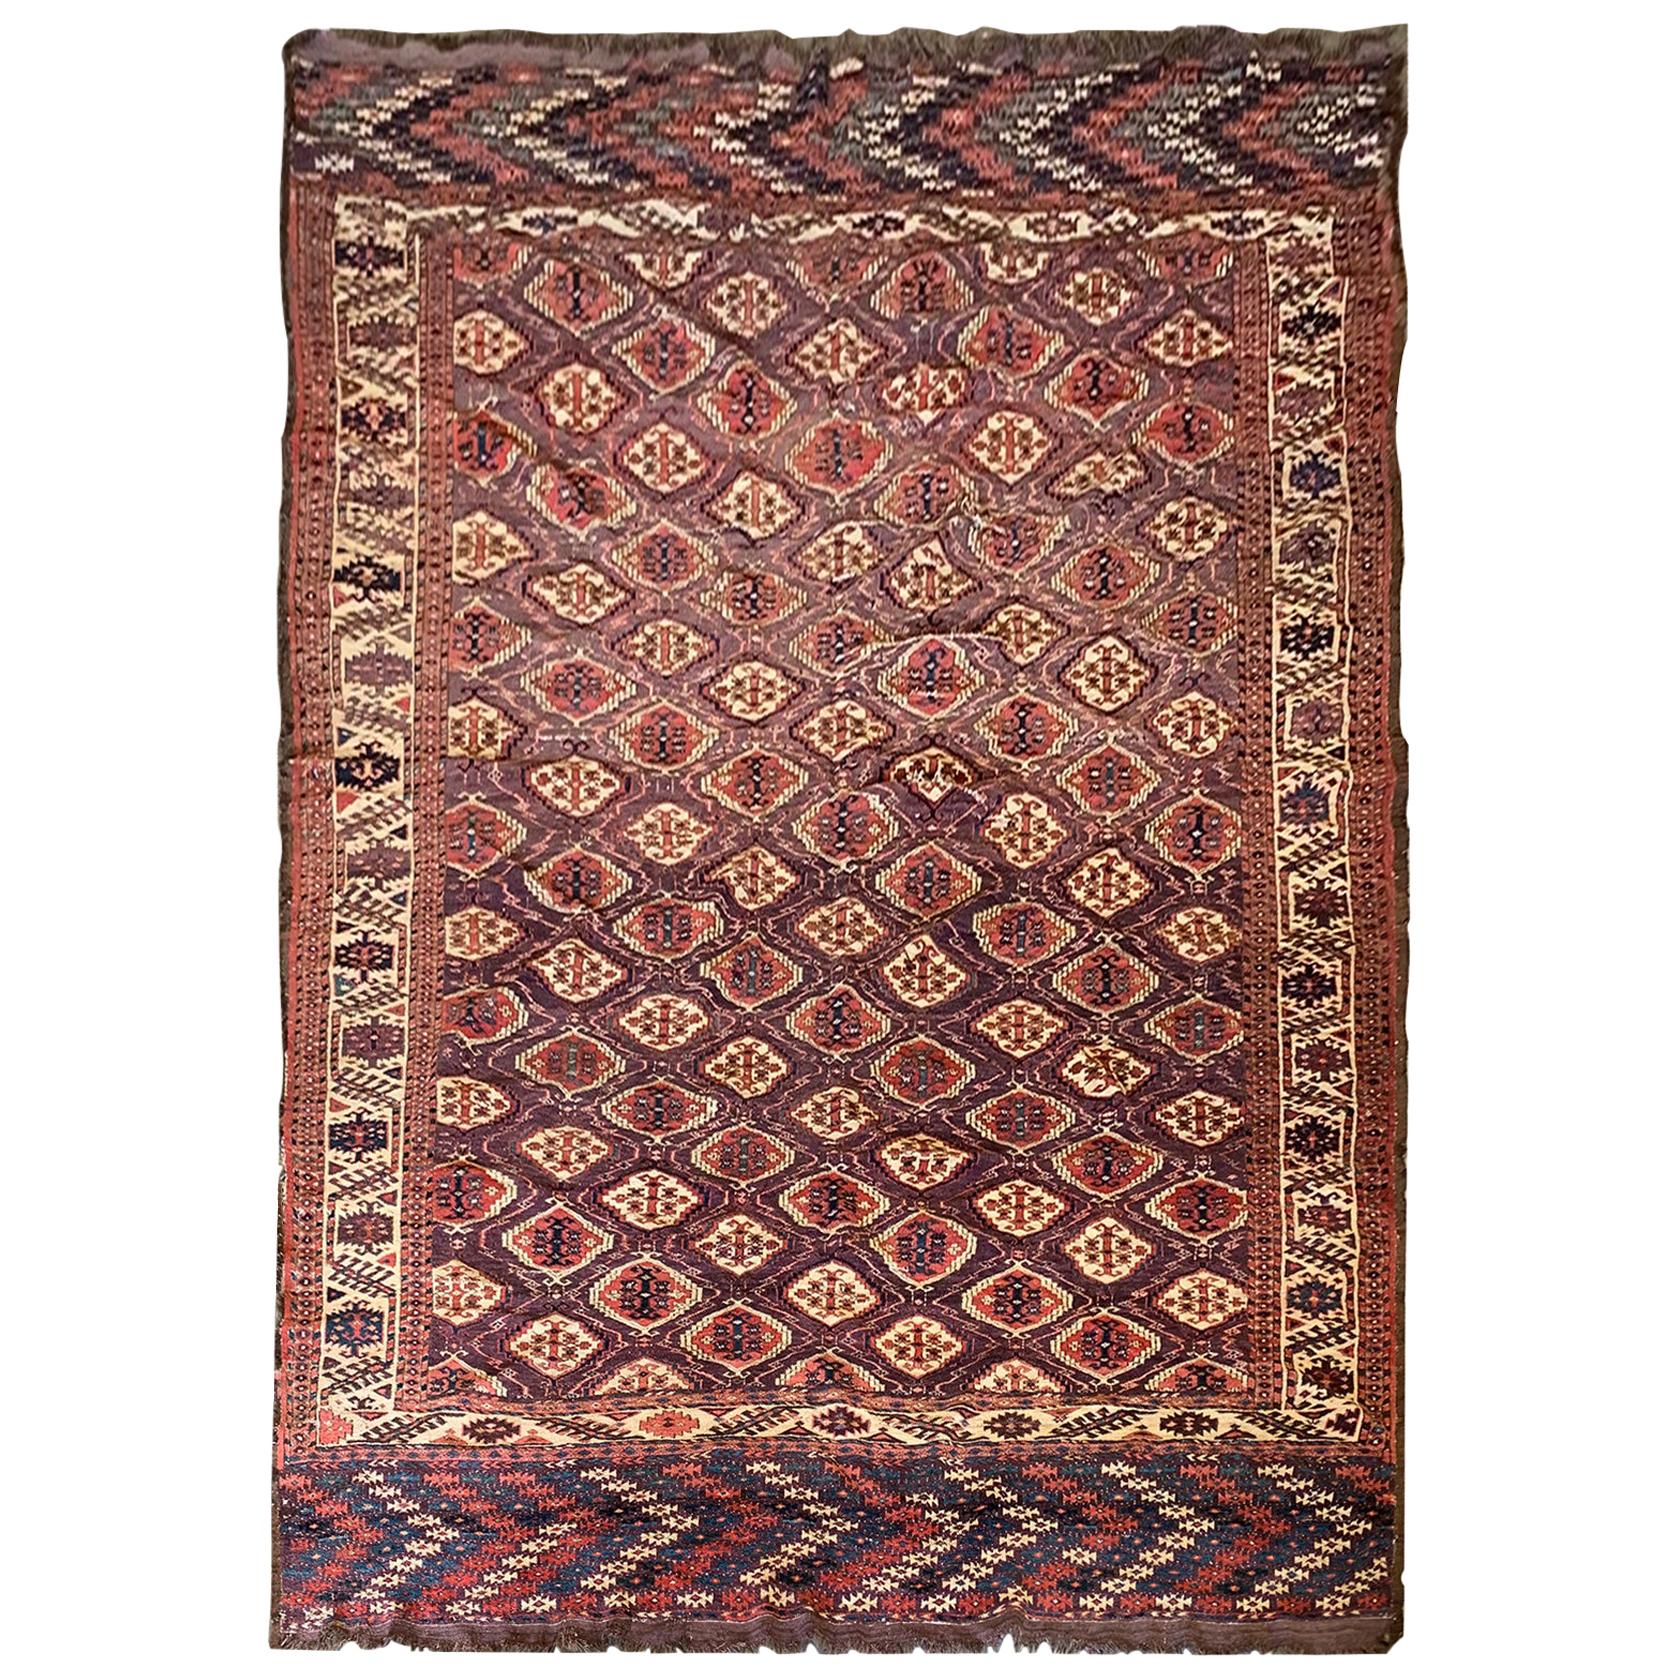 Handmade Oriental Turkmen Antique Carpet Wool Brown Cream Area Rug For Sale